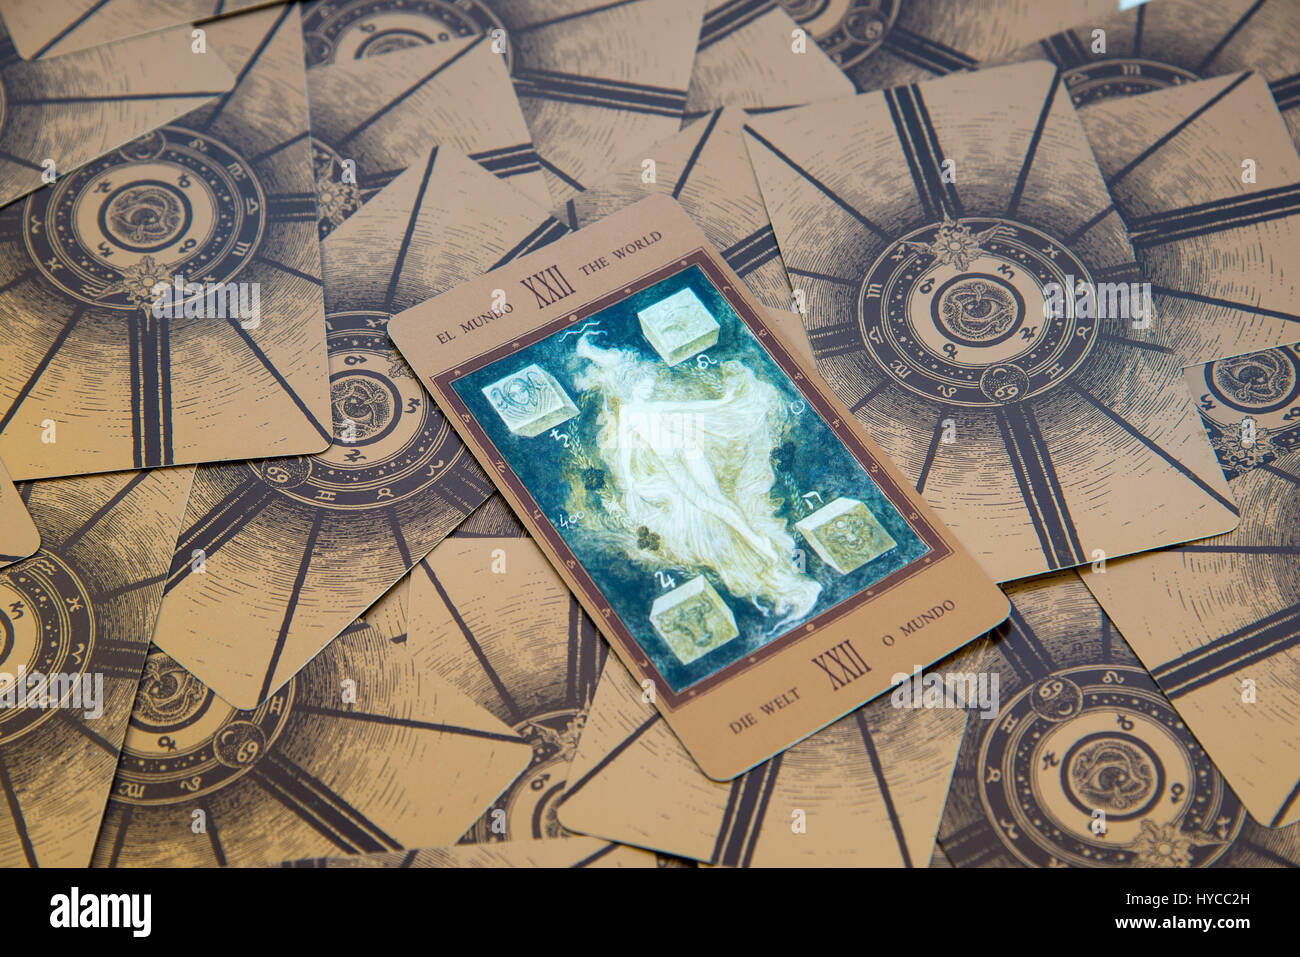 Moscow, Russia - January 29, 2017: Tarot card The World. Labirinth tarot deck. Esoteric background Stock Photo